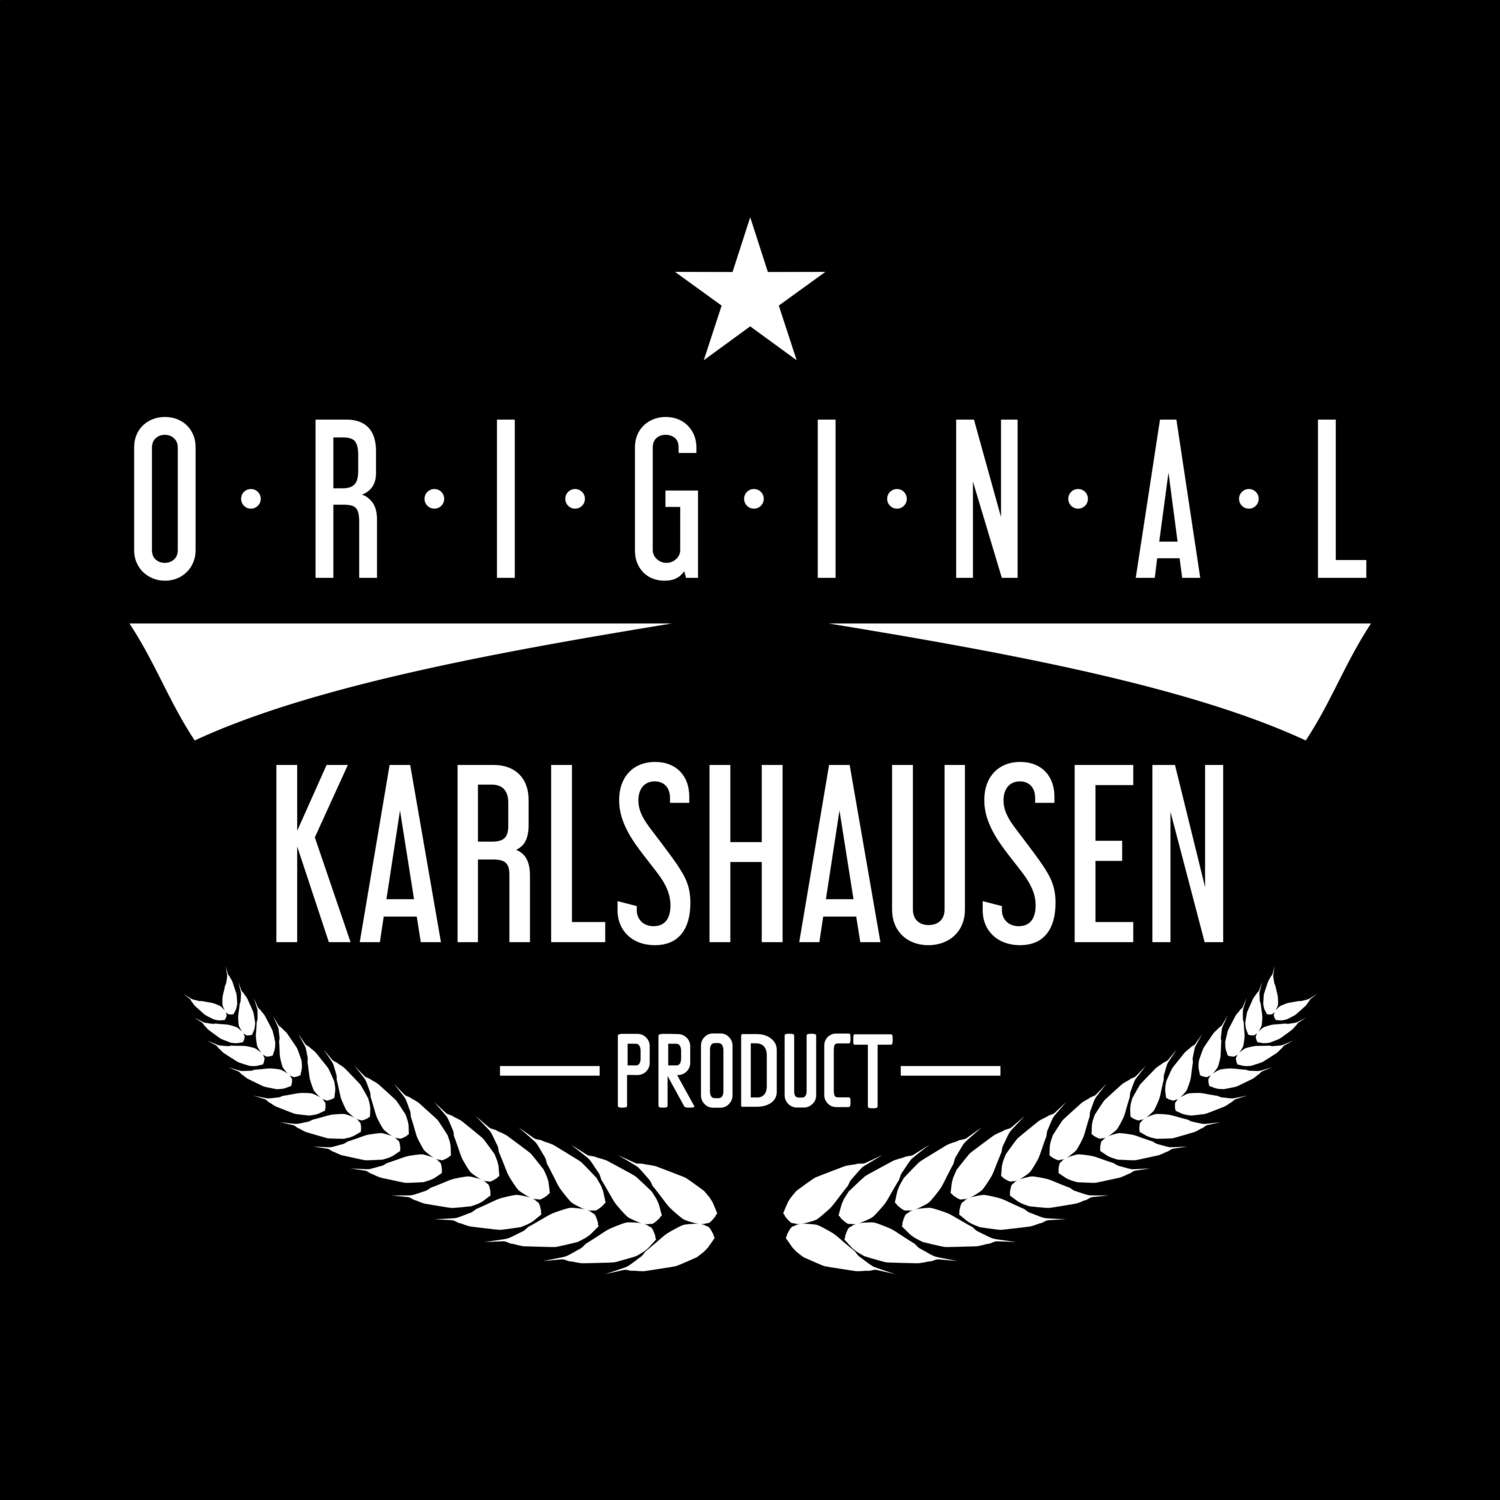 Karlshausen T-Shirt »Original Product«